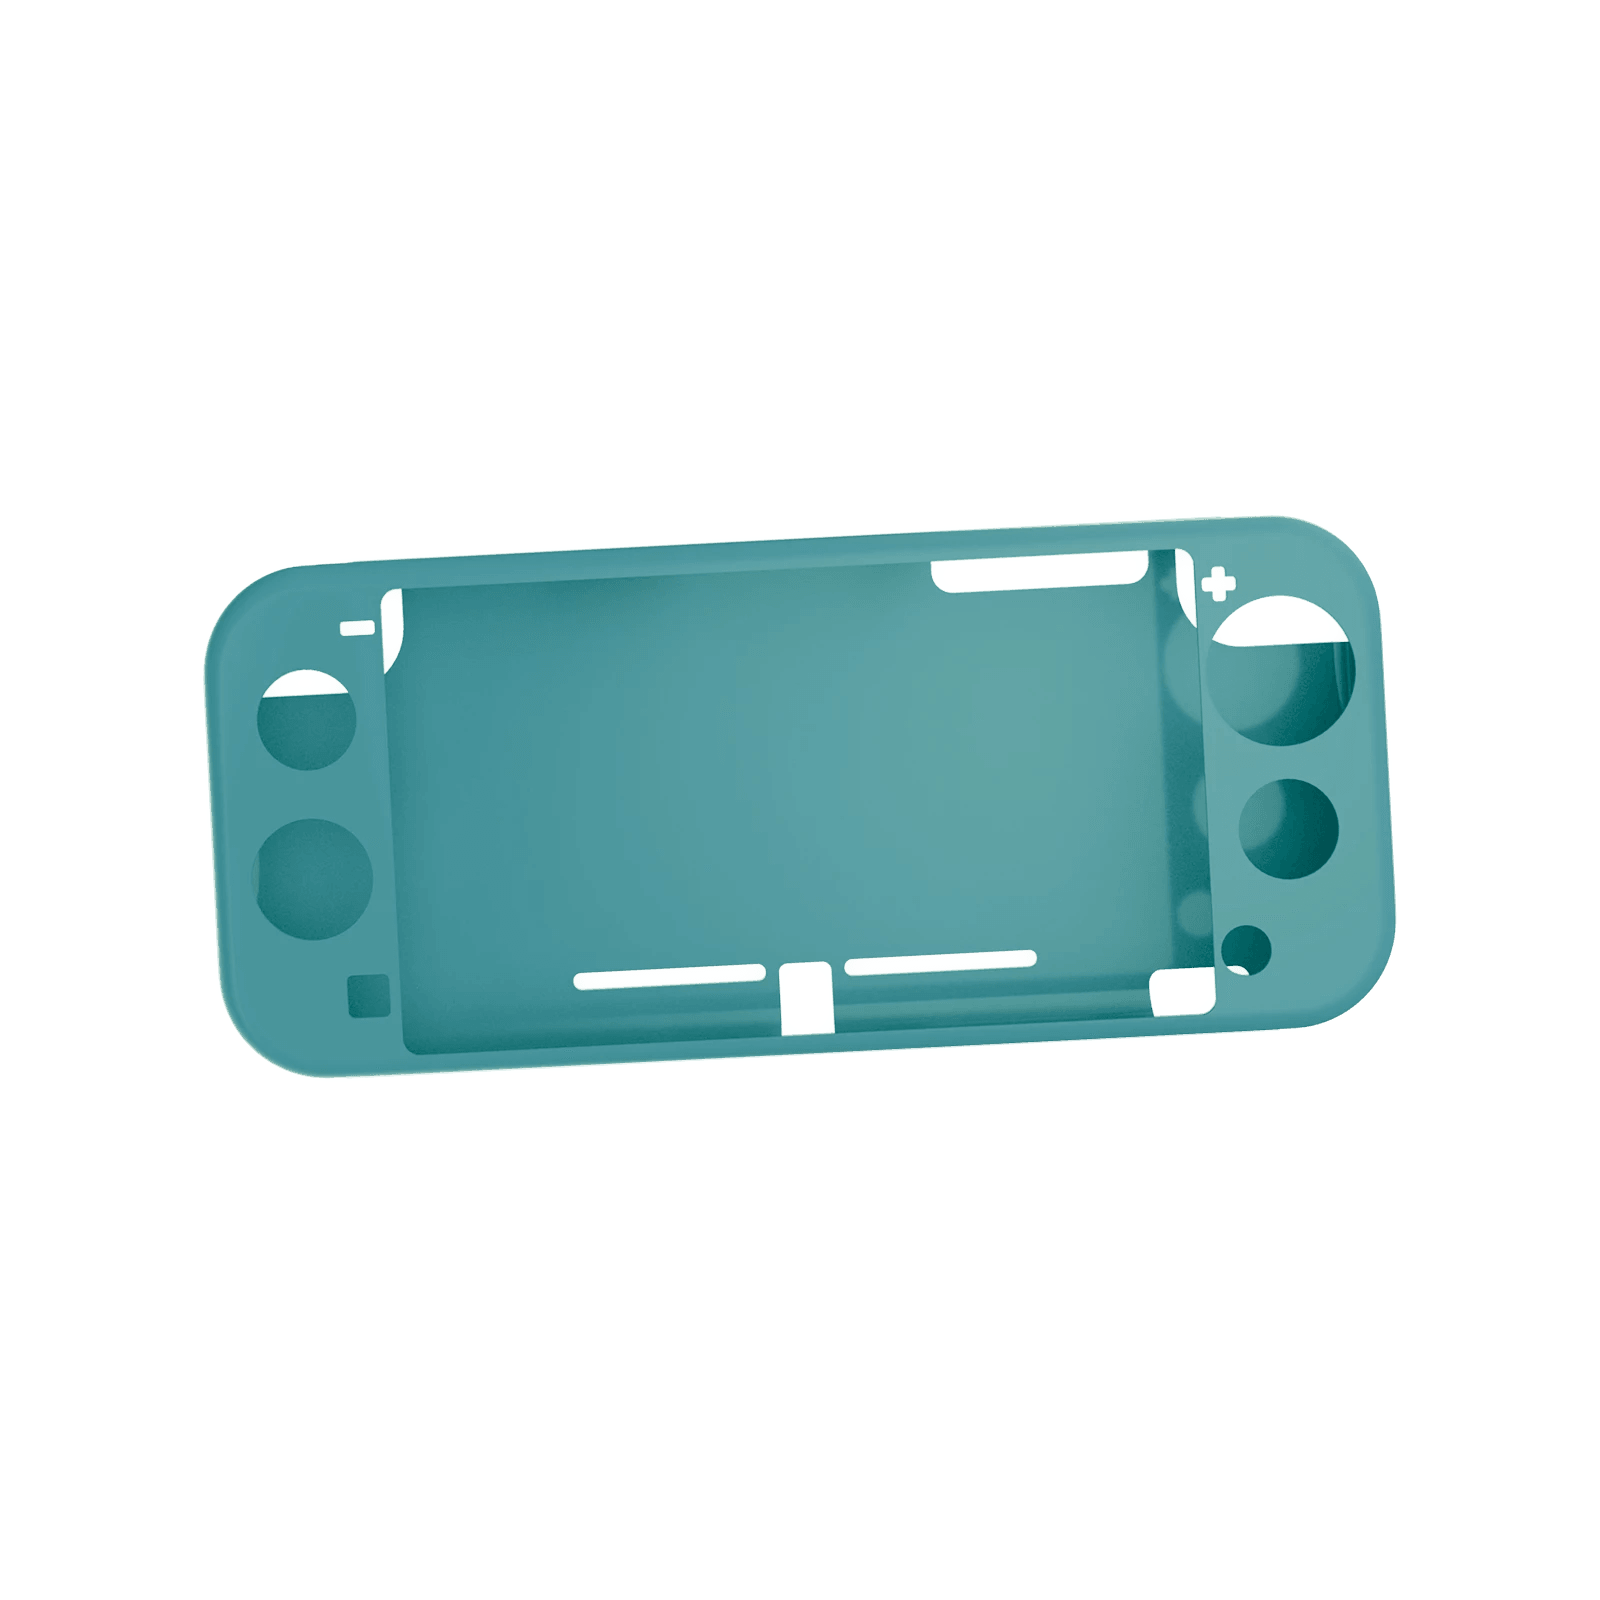 Konix Mythics Nintendo Switch Lite Silicone Skin Cover (Green) - GameStore.mt | Powered by Flutisat